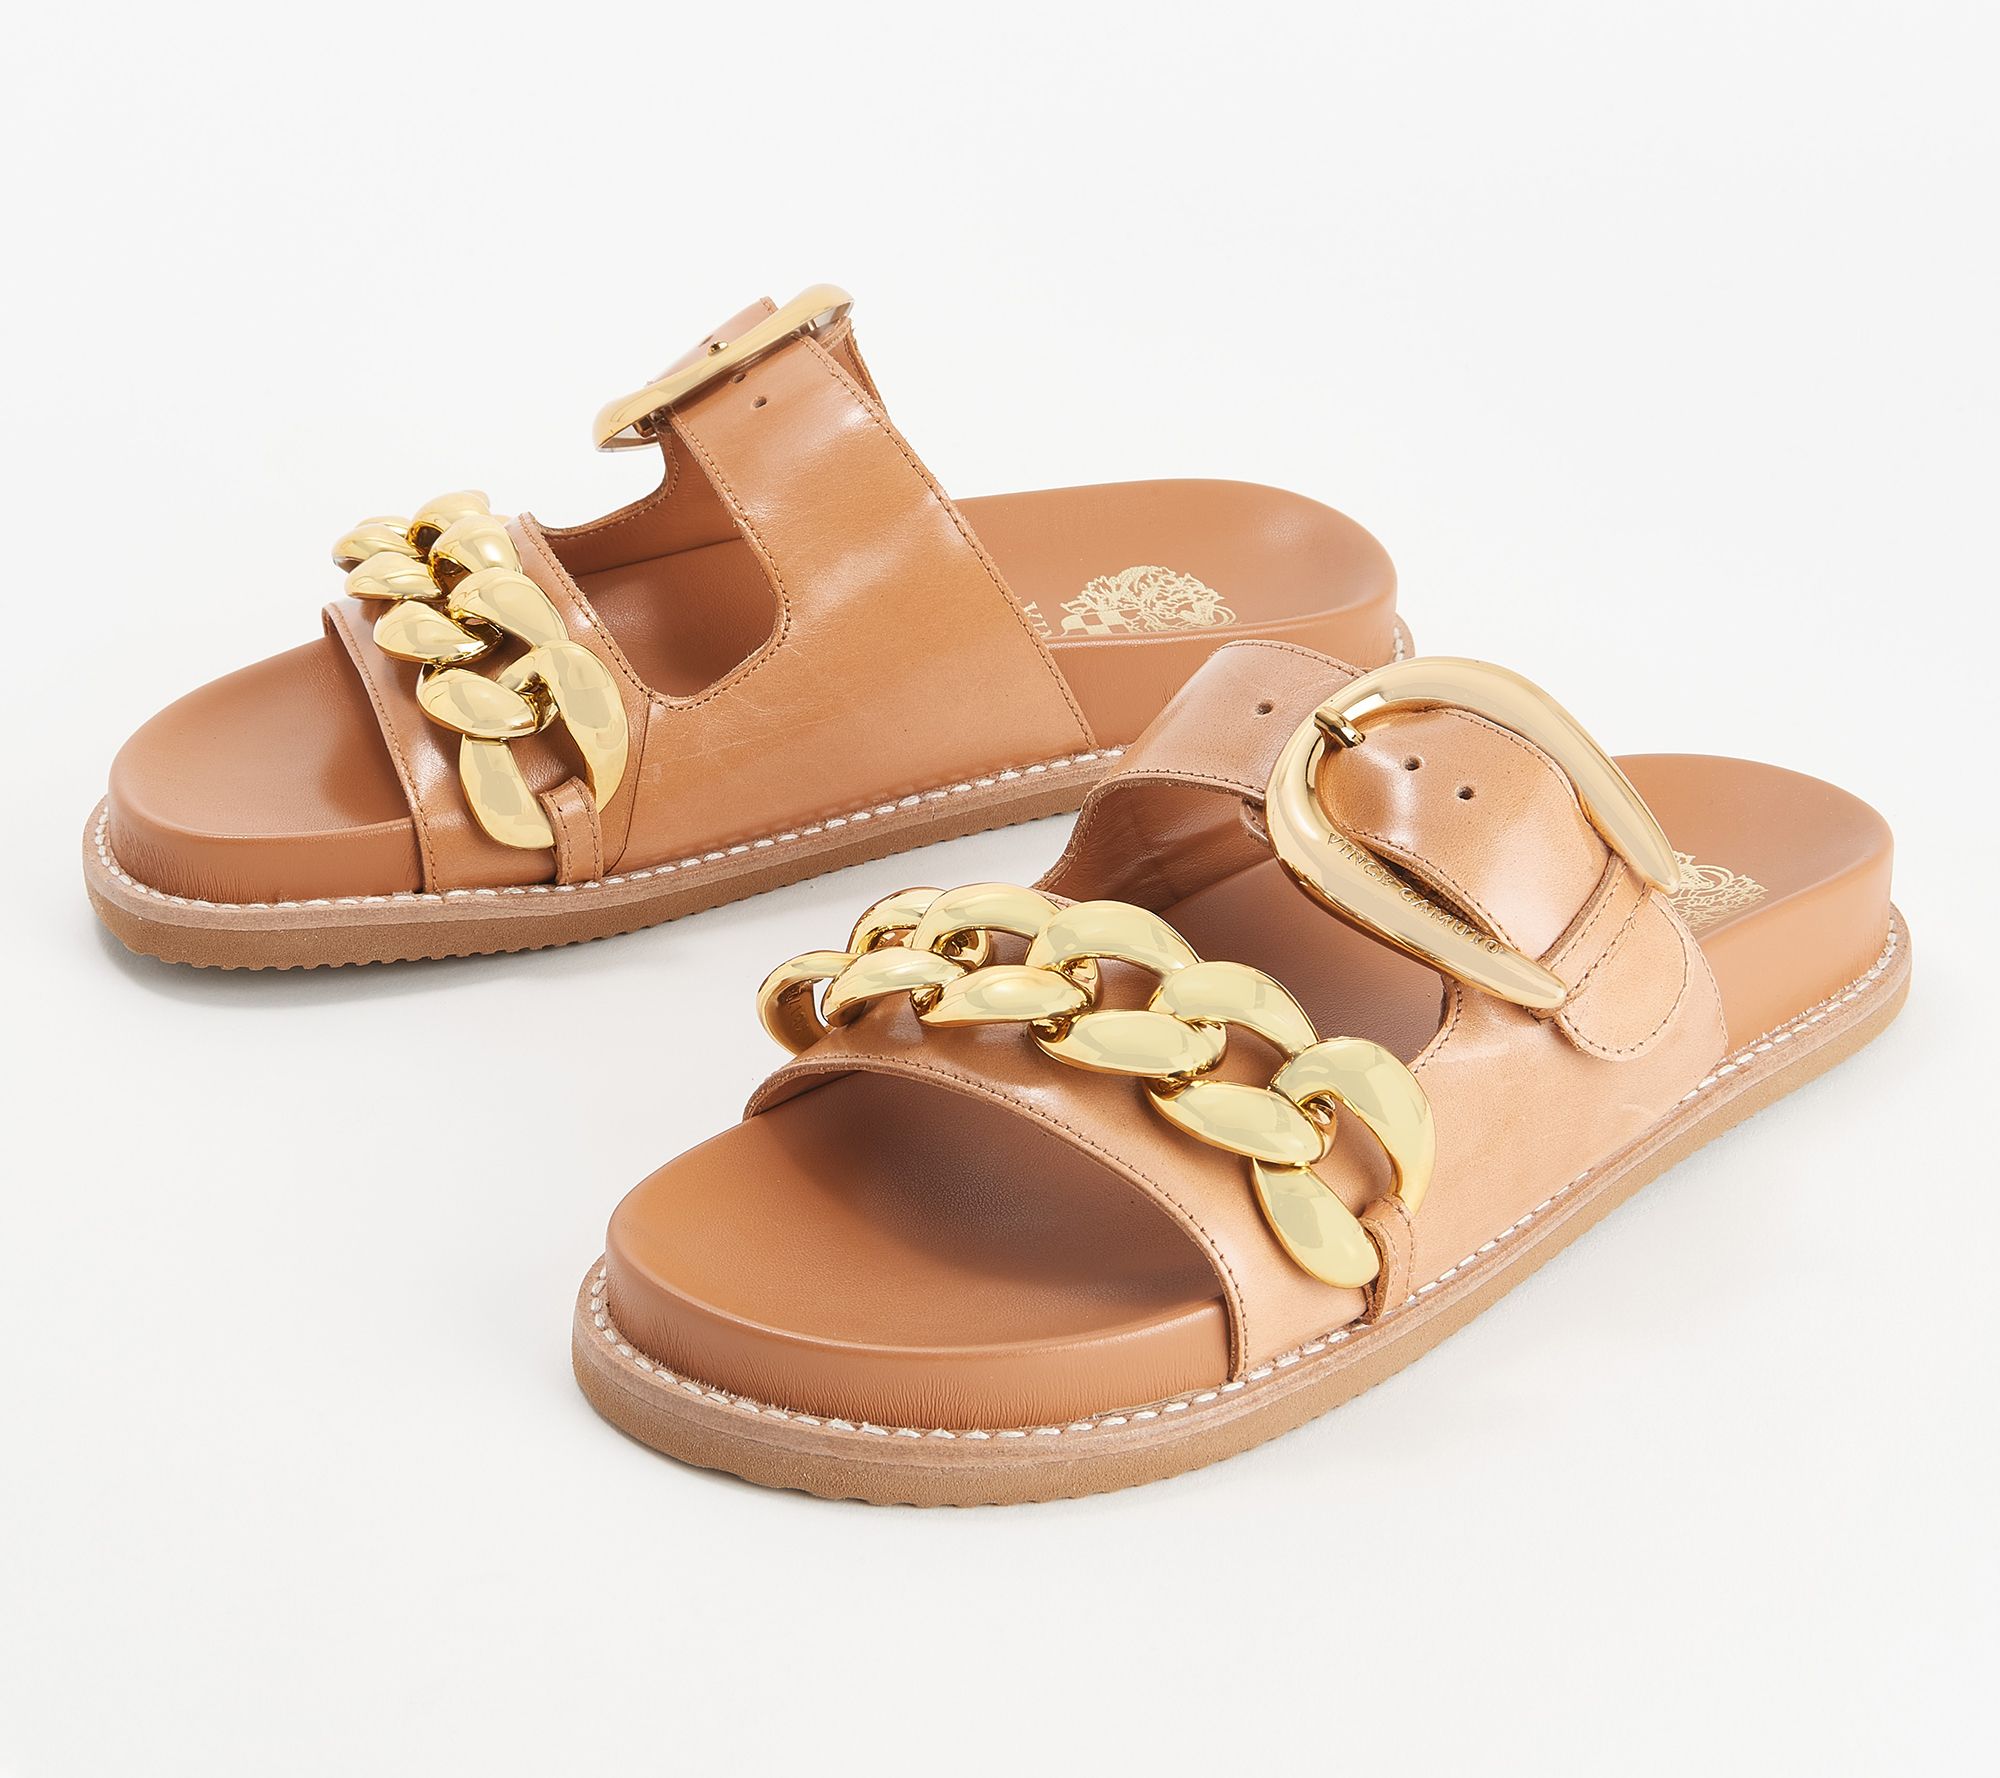 Vince Camuto Leather Slide Sandals - Kenedys - QVC.com